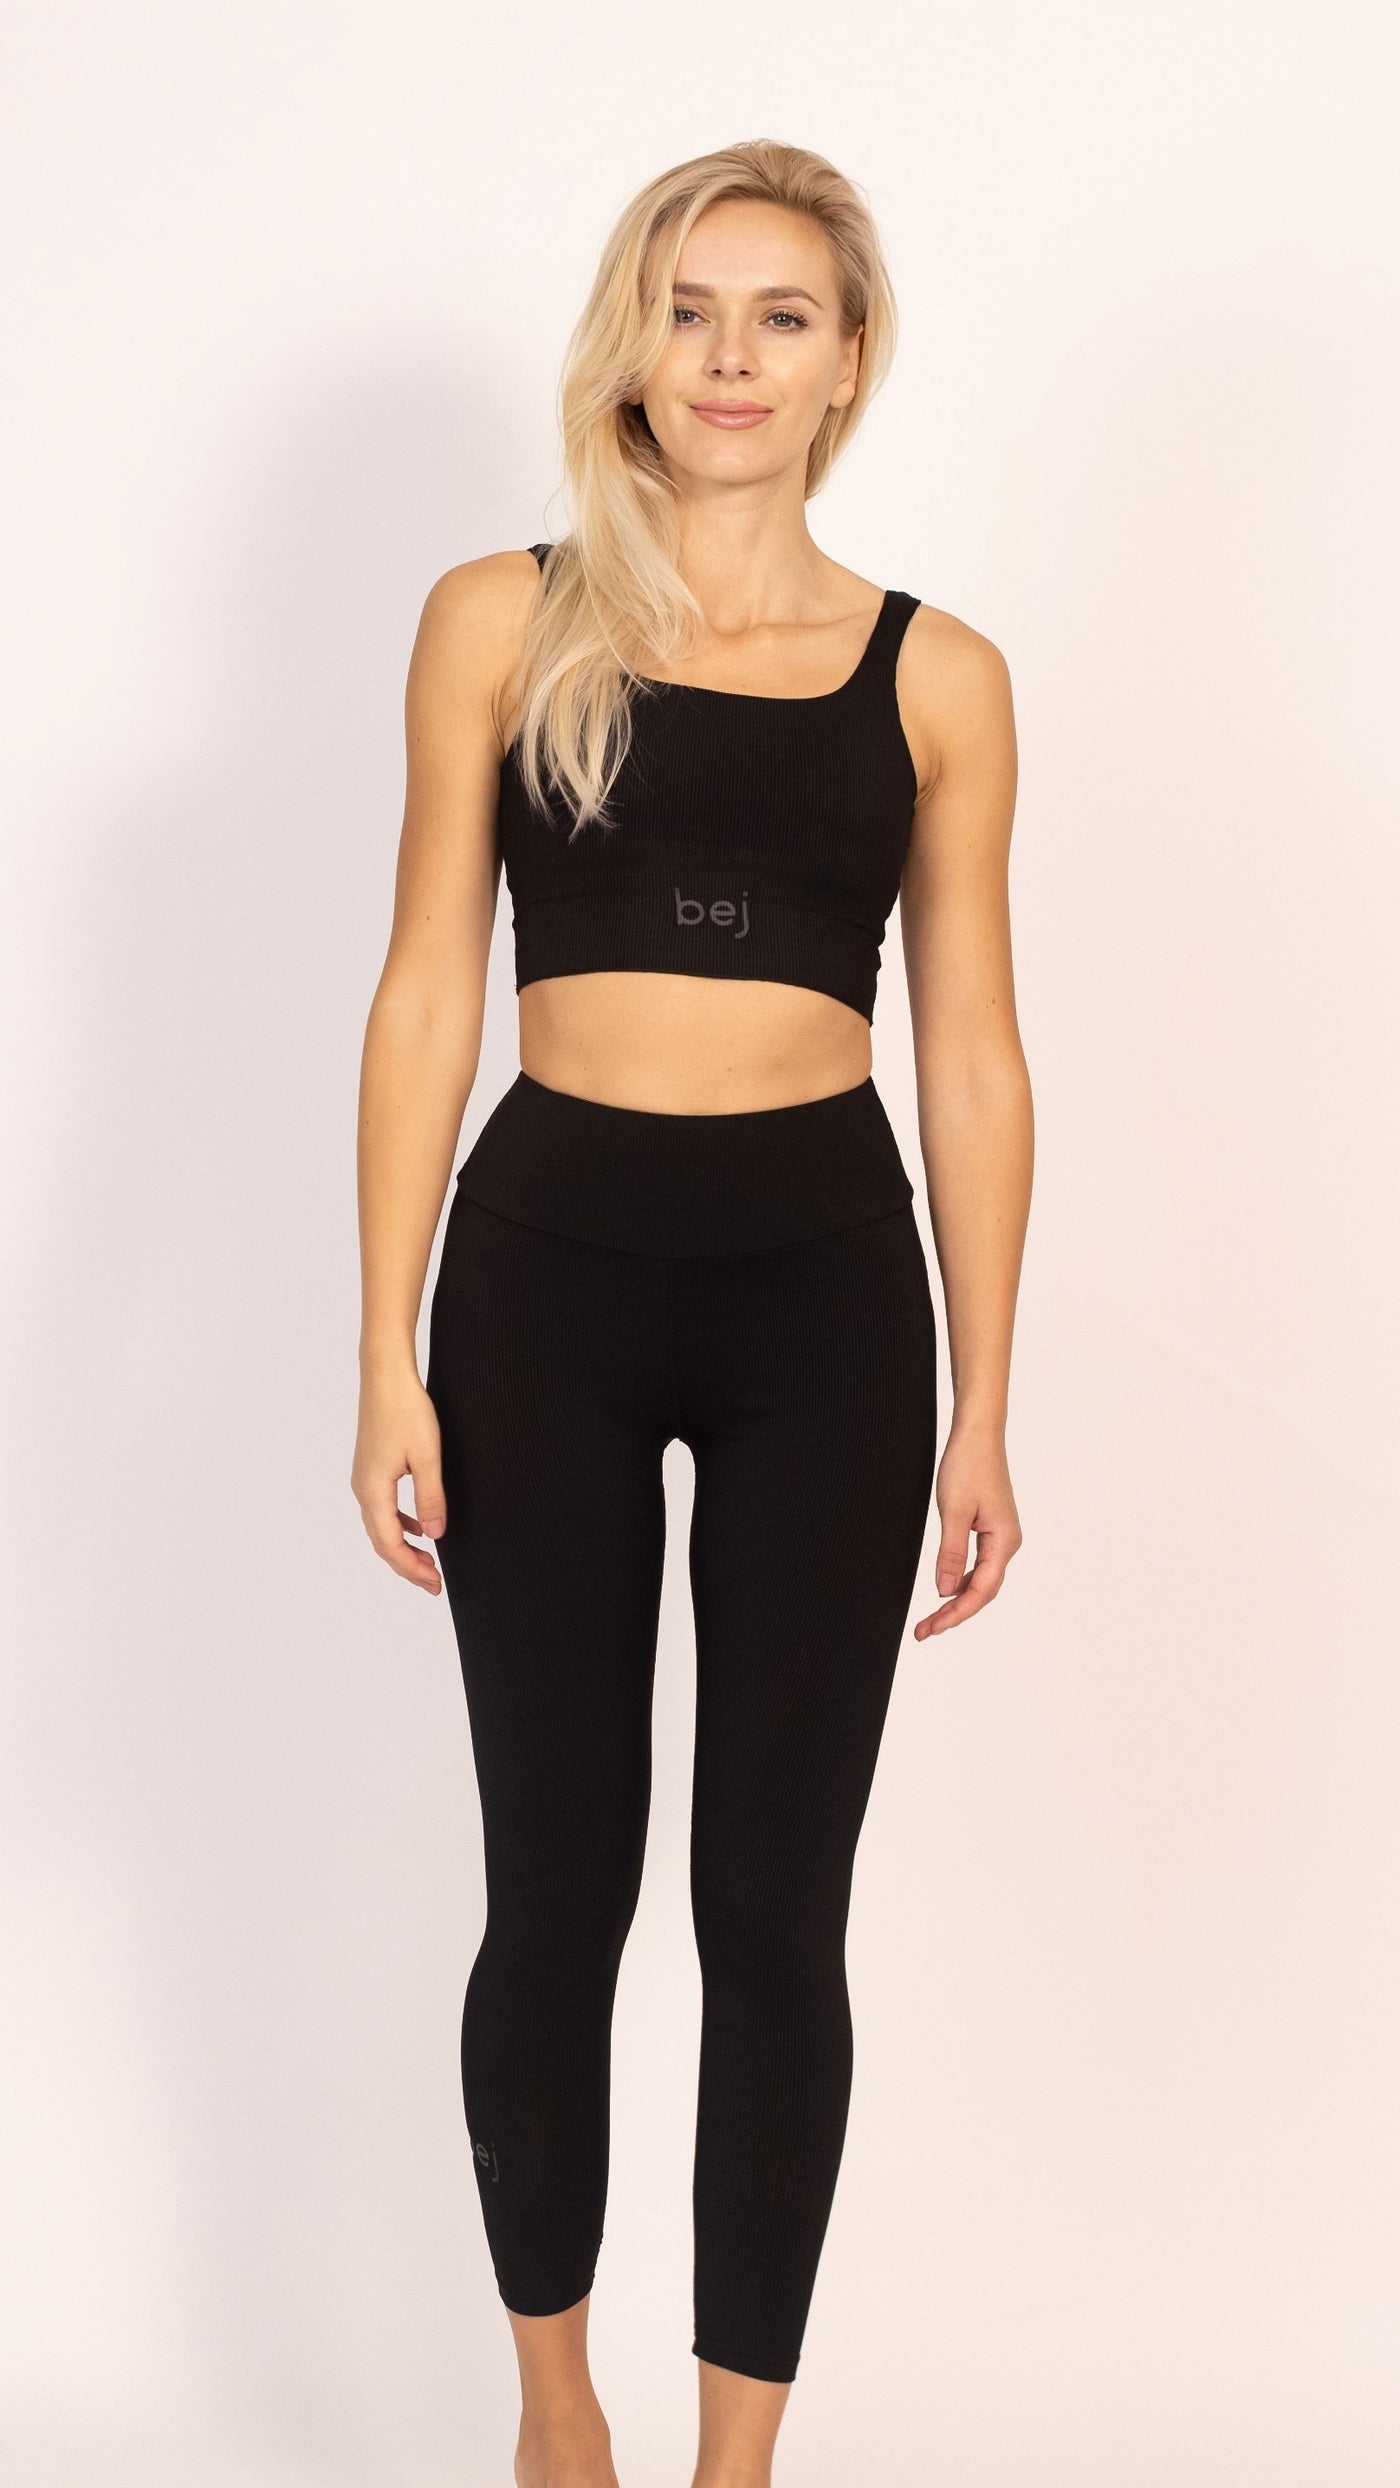 Escapade Black Leggings - Shop women's workout apparel online | Leggings, hoodies, Top & bras | bejactive